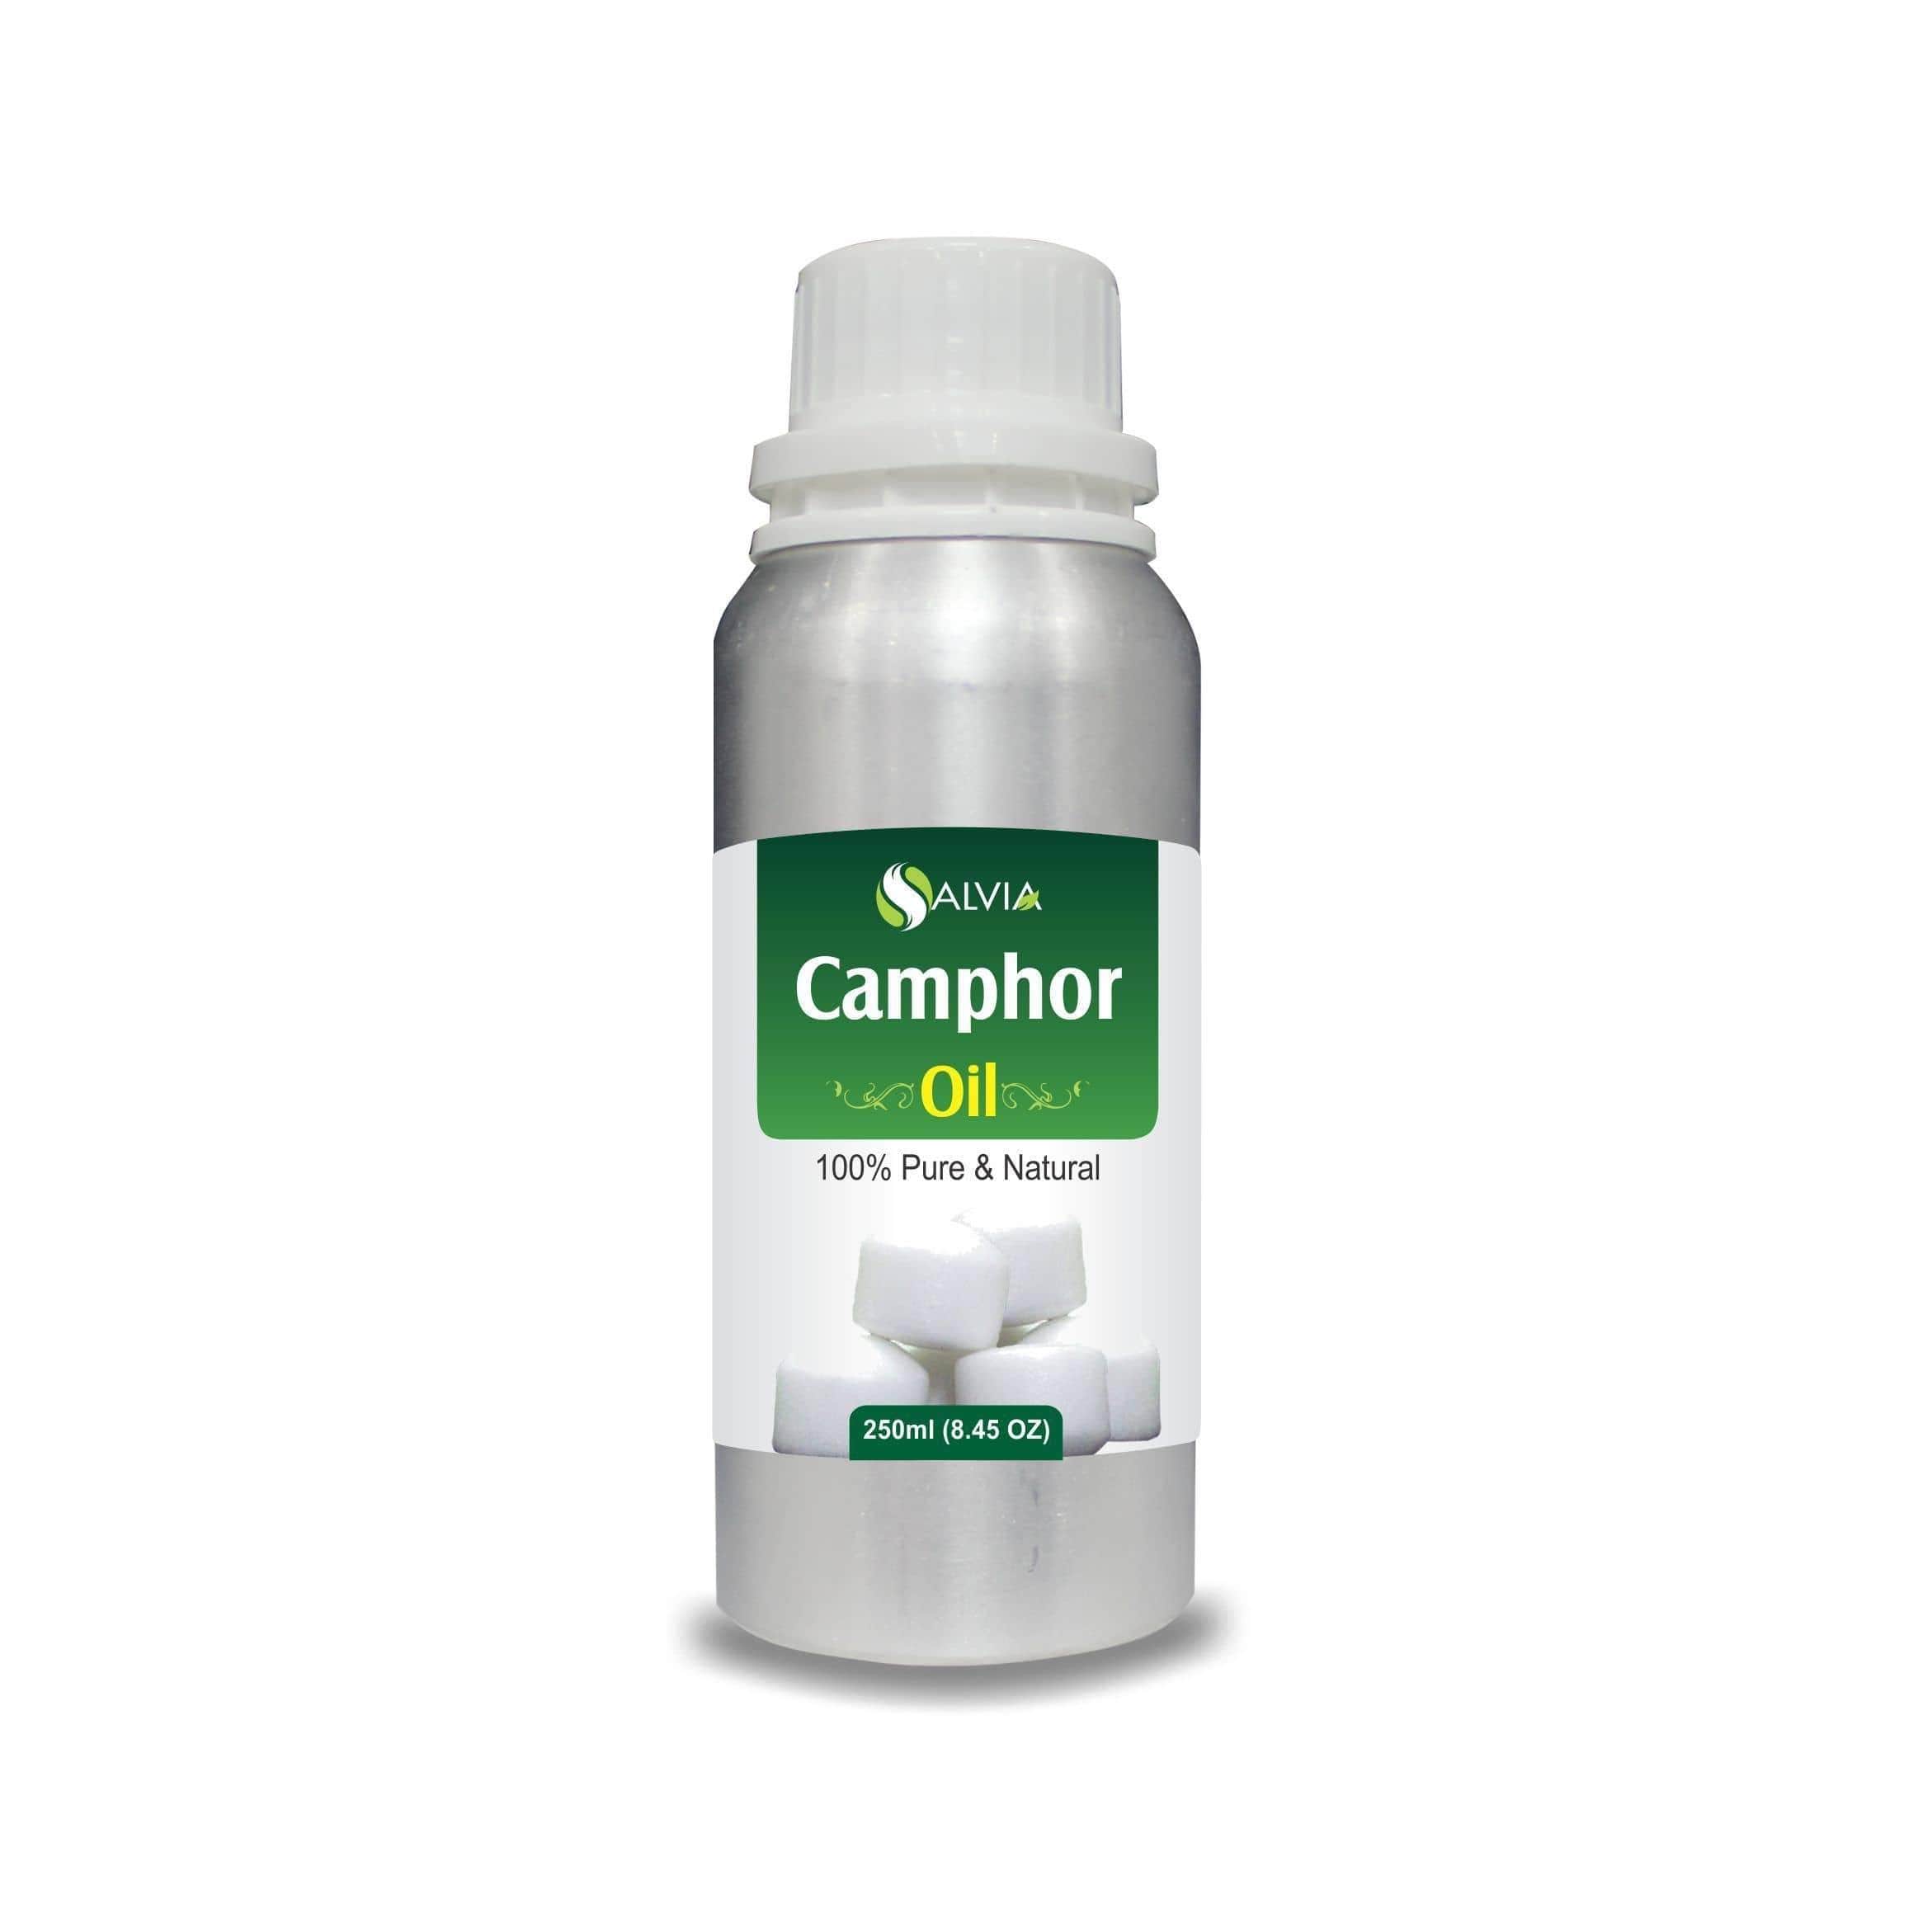 Salvia Natural Essential Oils 250ml Camphor Oil (Cinnamonutn Camphora) 100% Natural Pure Essential Oil